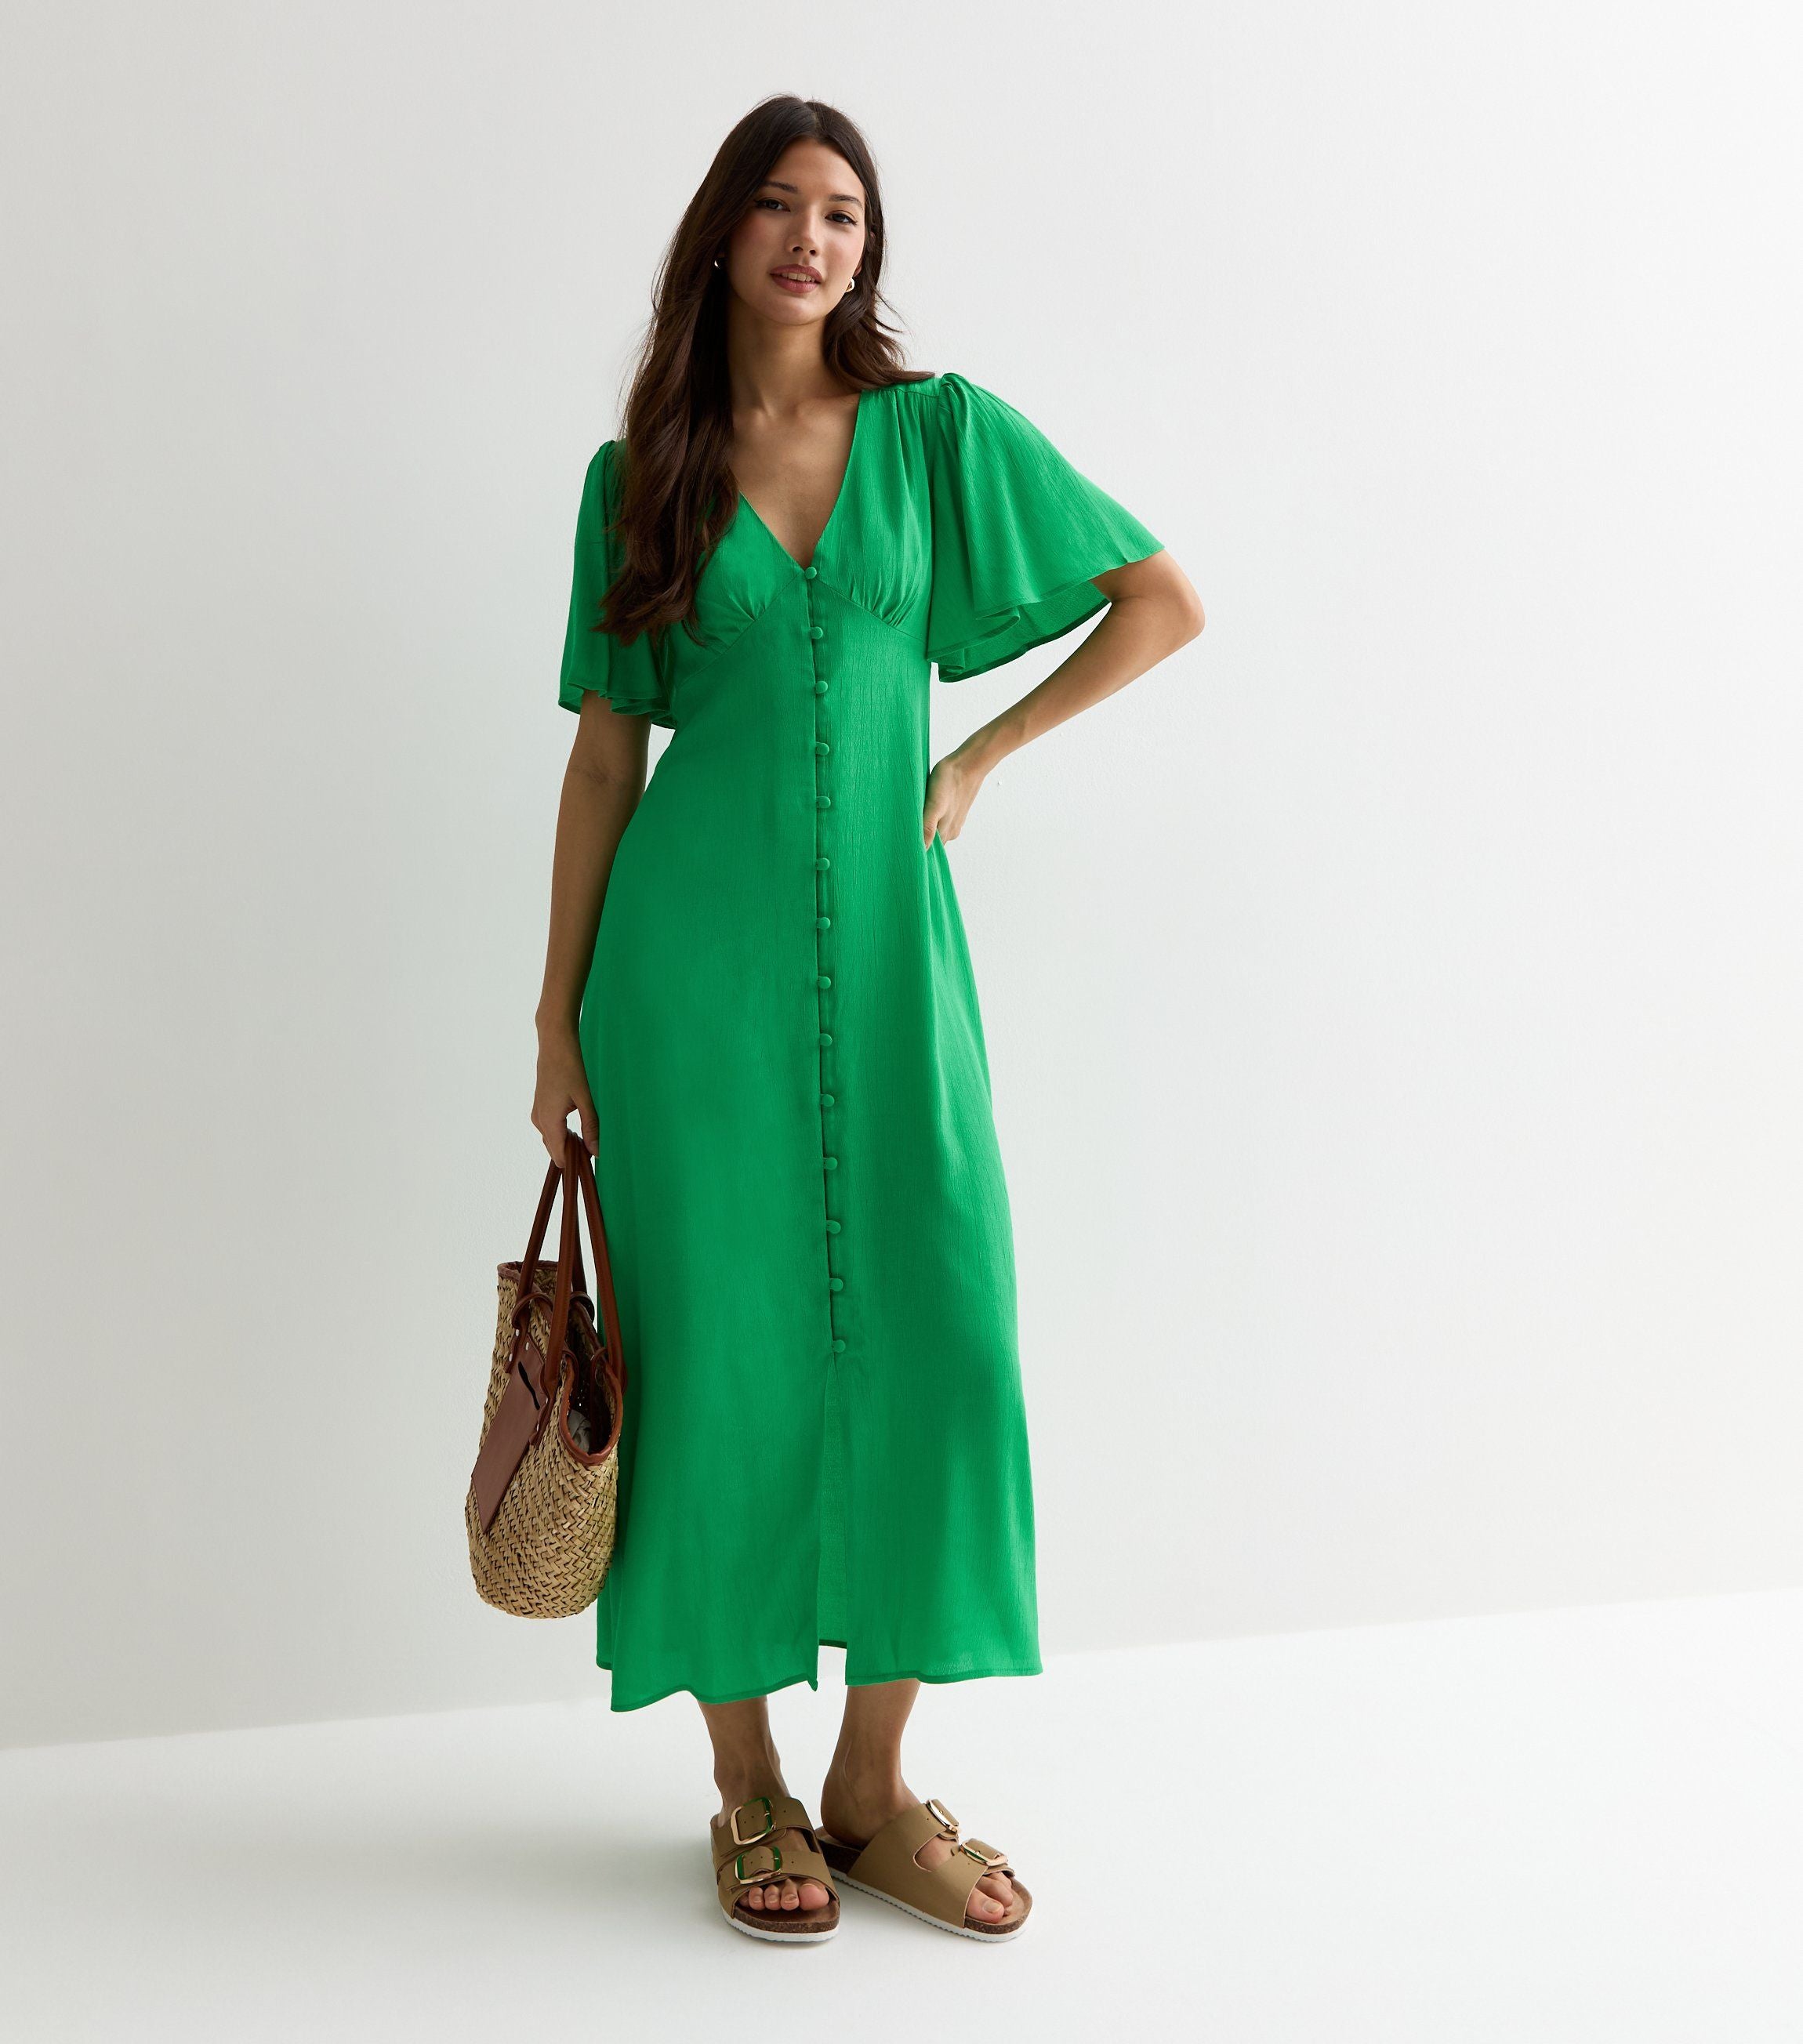 gini-london-green-button-front-midi-dress.jpg